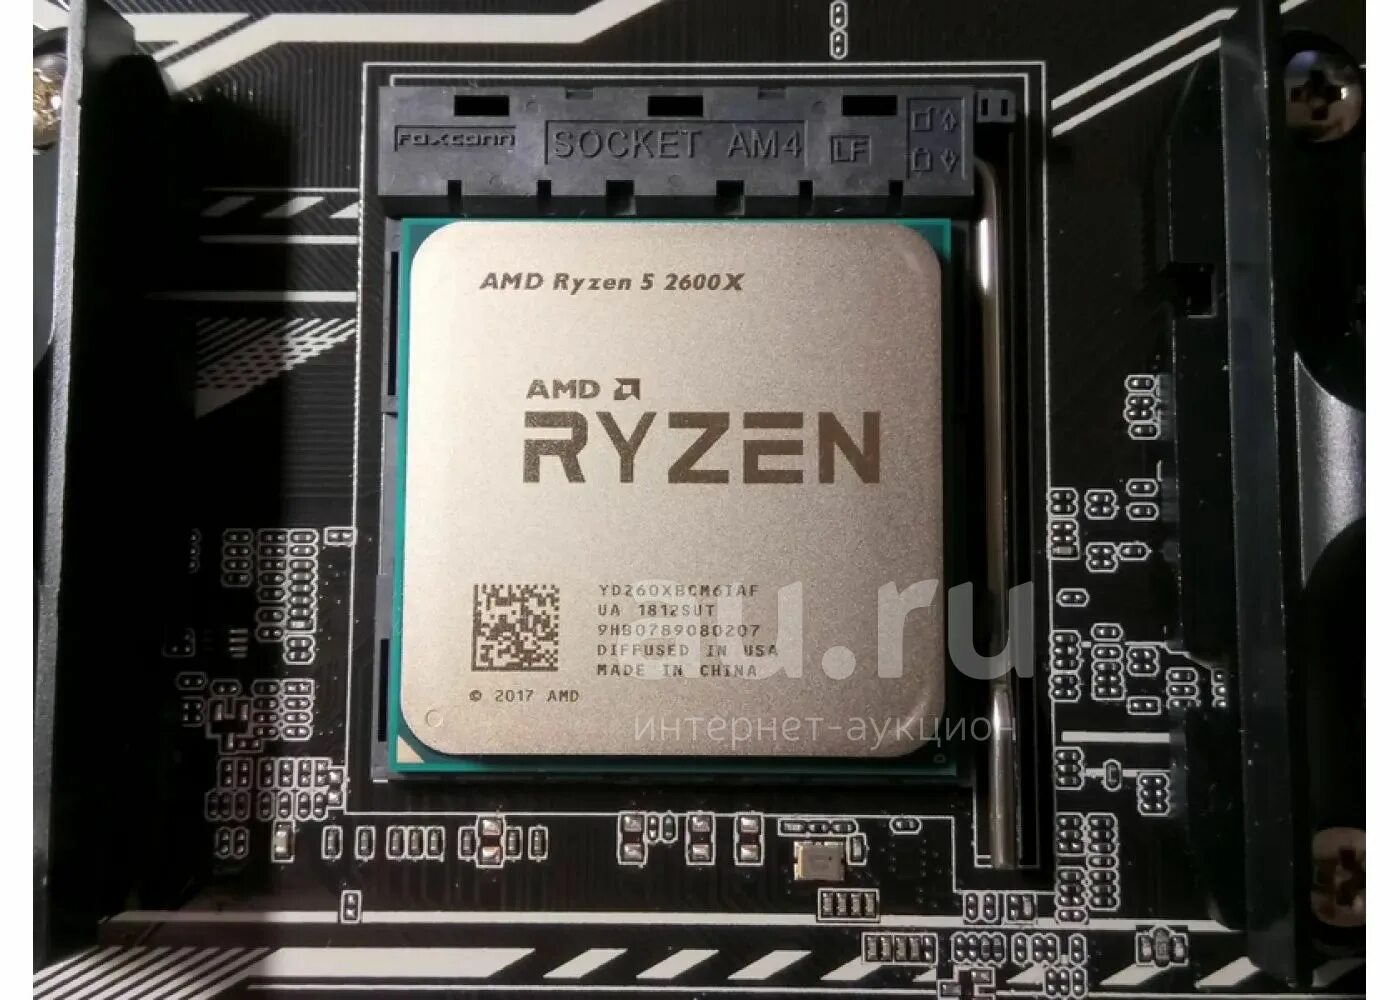 Ryzen 5 2600 купить. AMD Ryzen 5 2600x (Box). AMD 5 2600. Процессор AMD Ryzen 5 2600, socketam4, Box. Ryzen 7 2600.